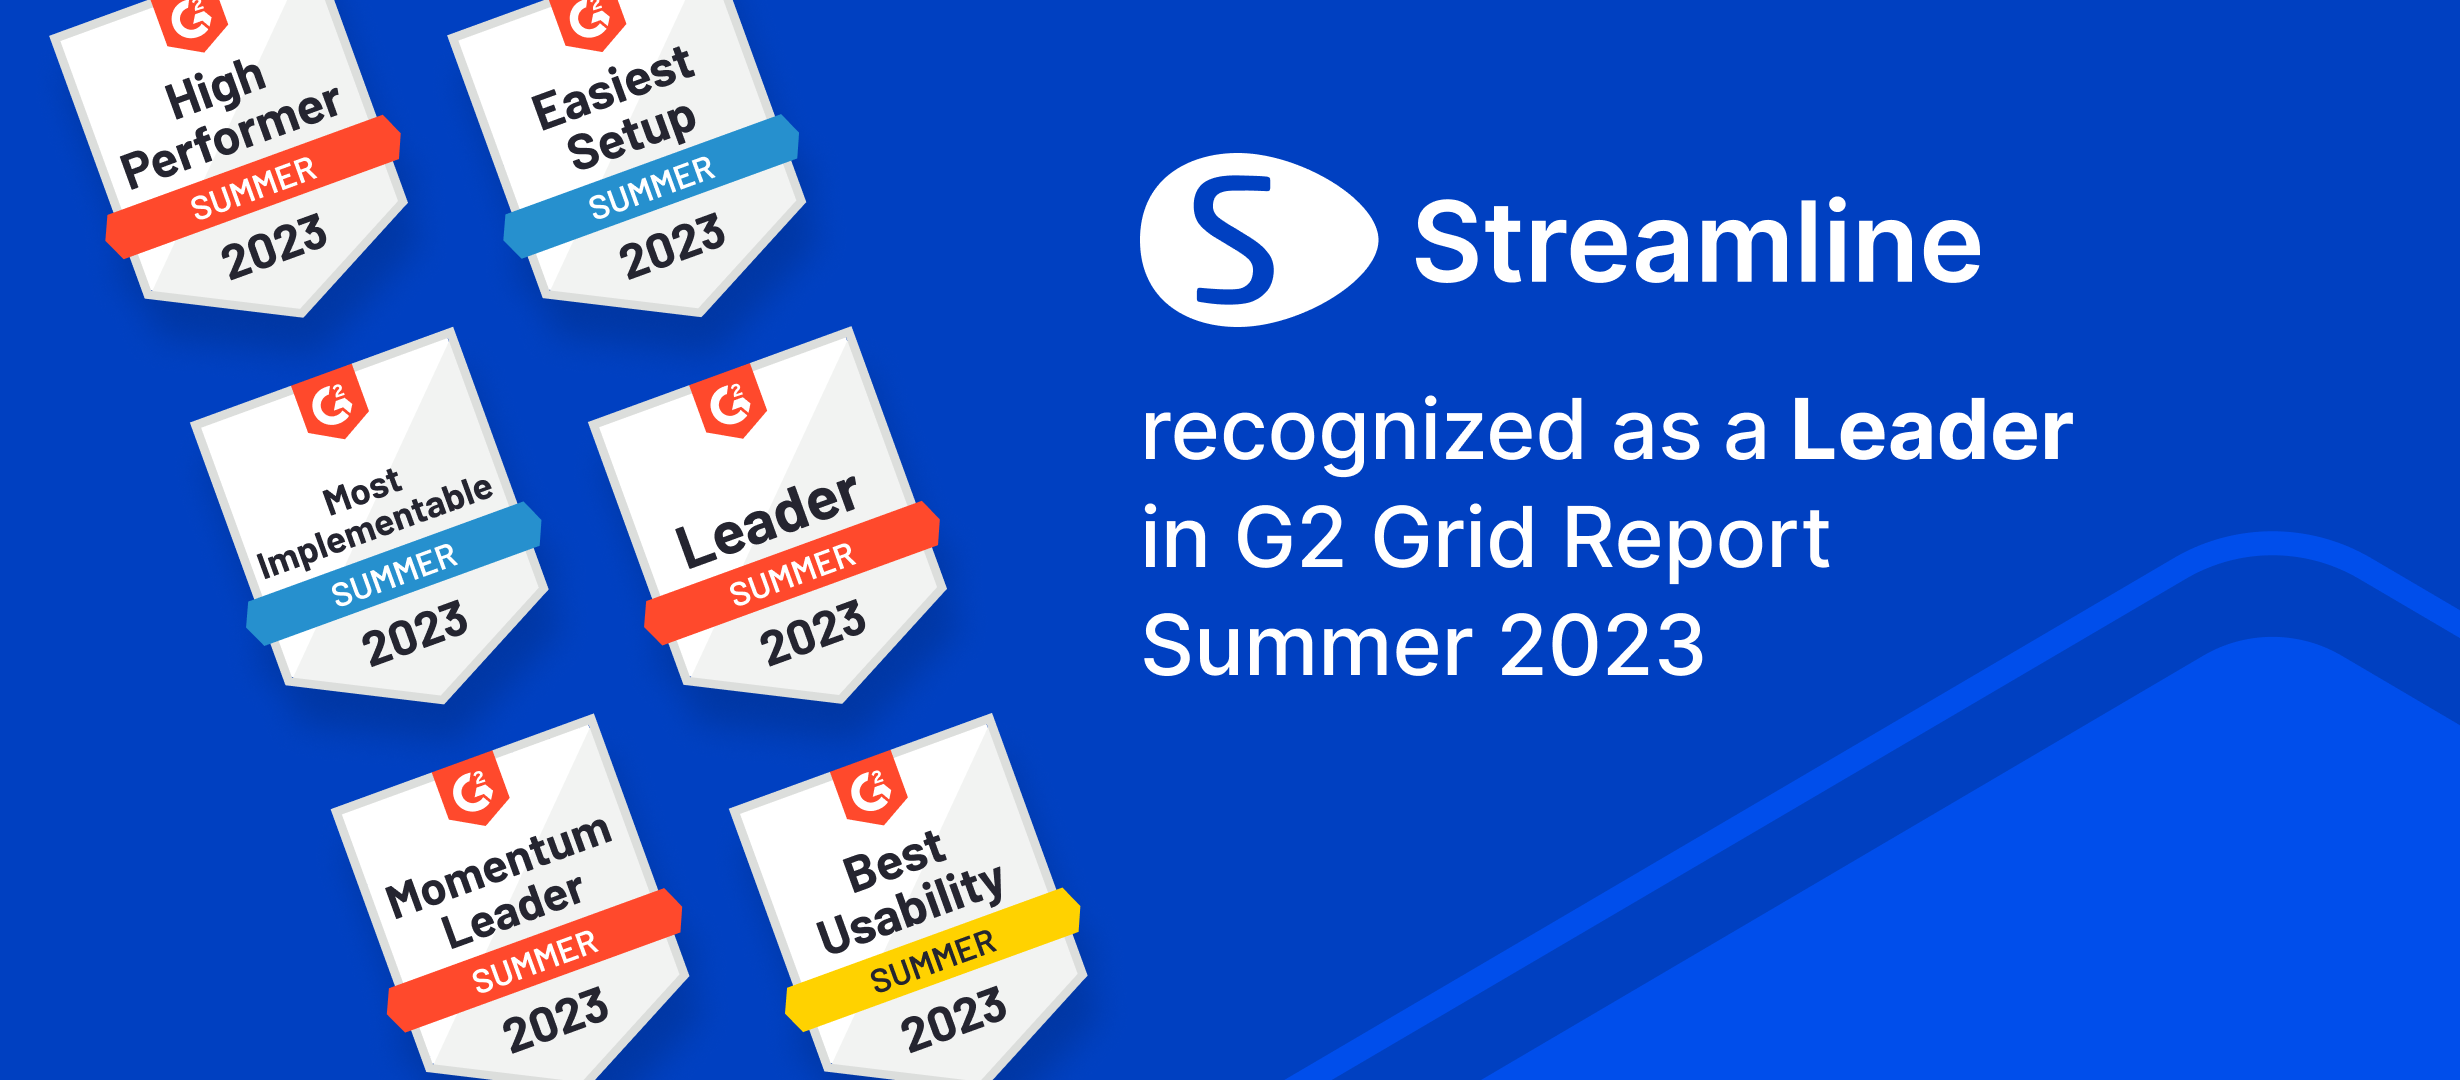 GMDH Streamline nommé leader dans plusieurs catégories dans les rapports G2 Summer'23 | GMDH